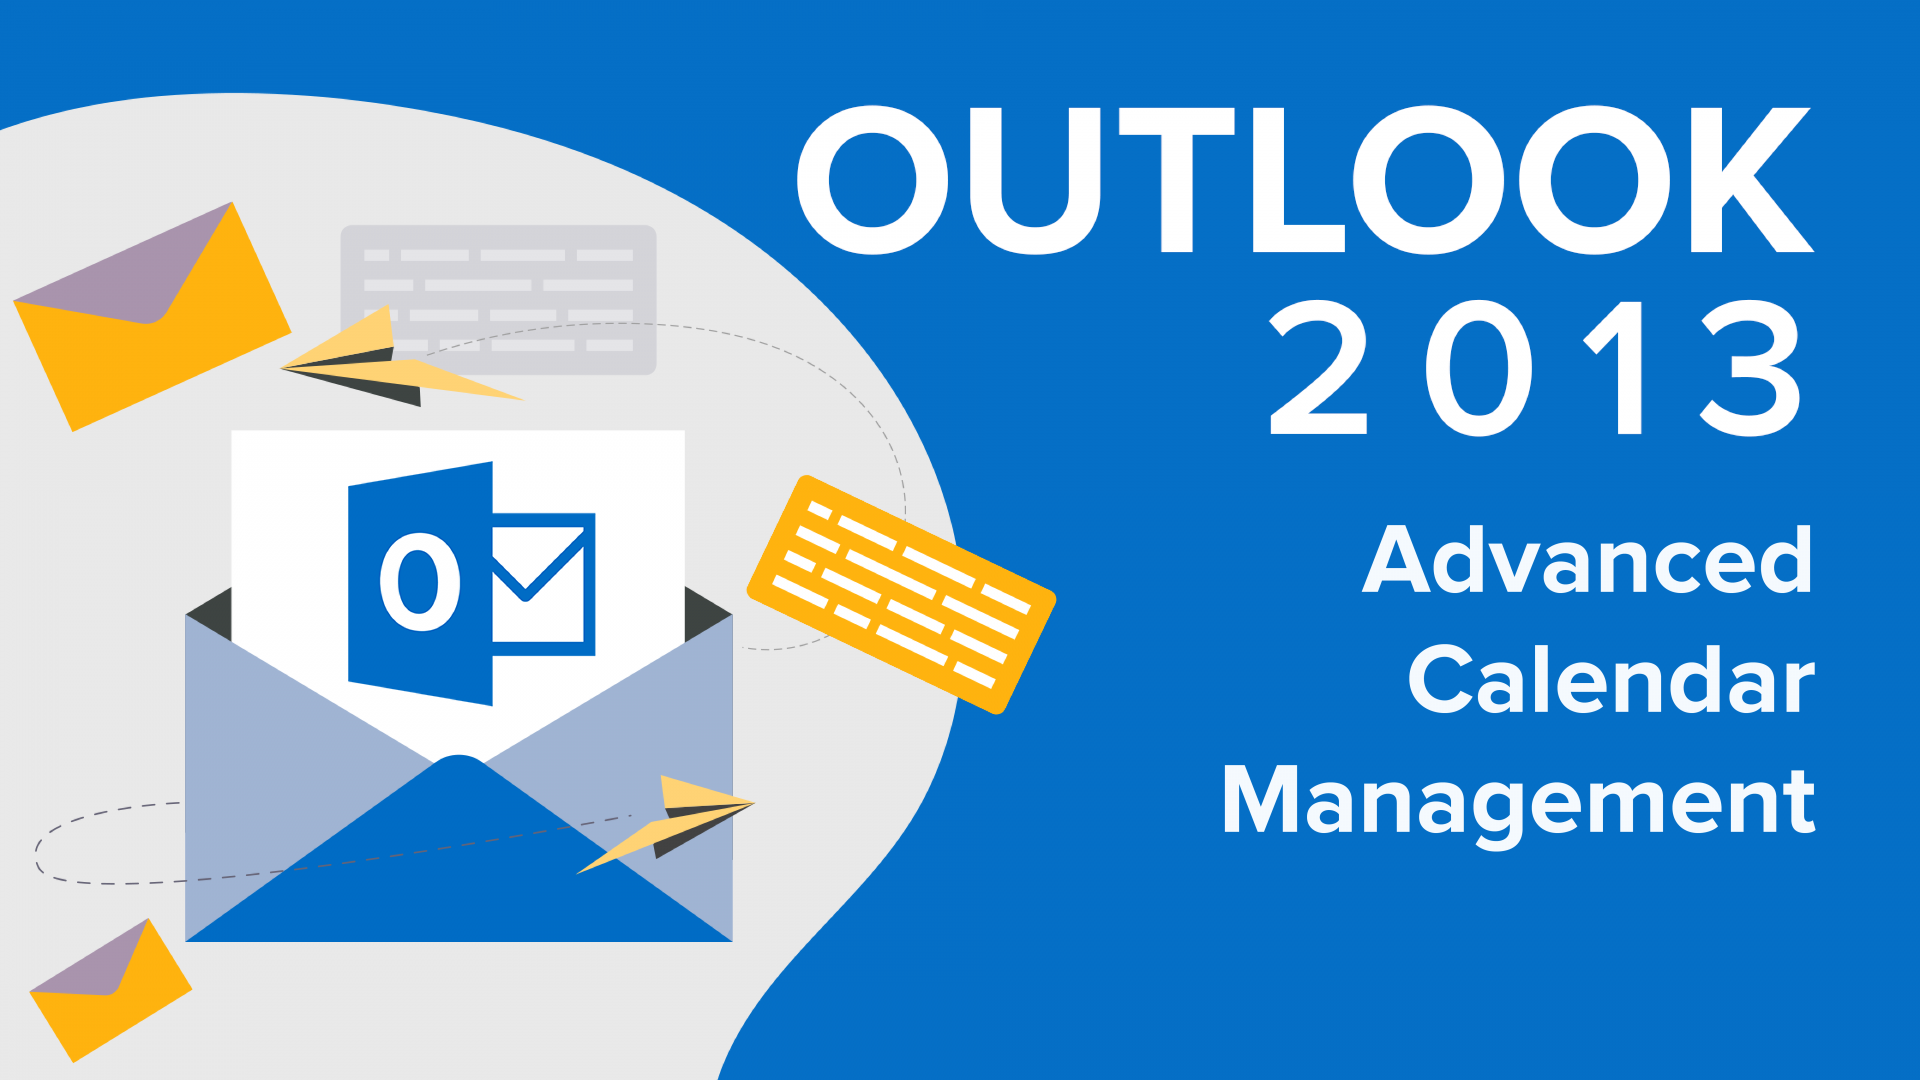 Summary: Advanced Calendar Management in Outlook